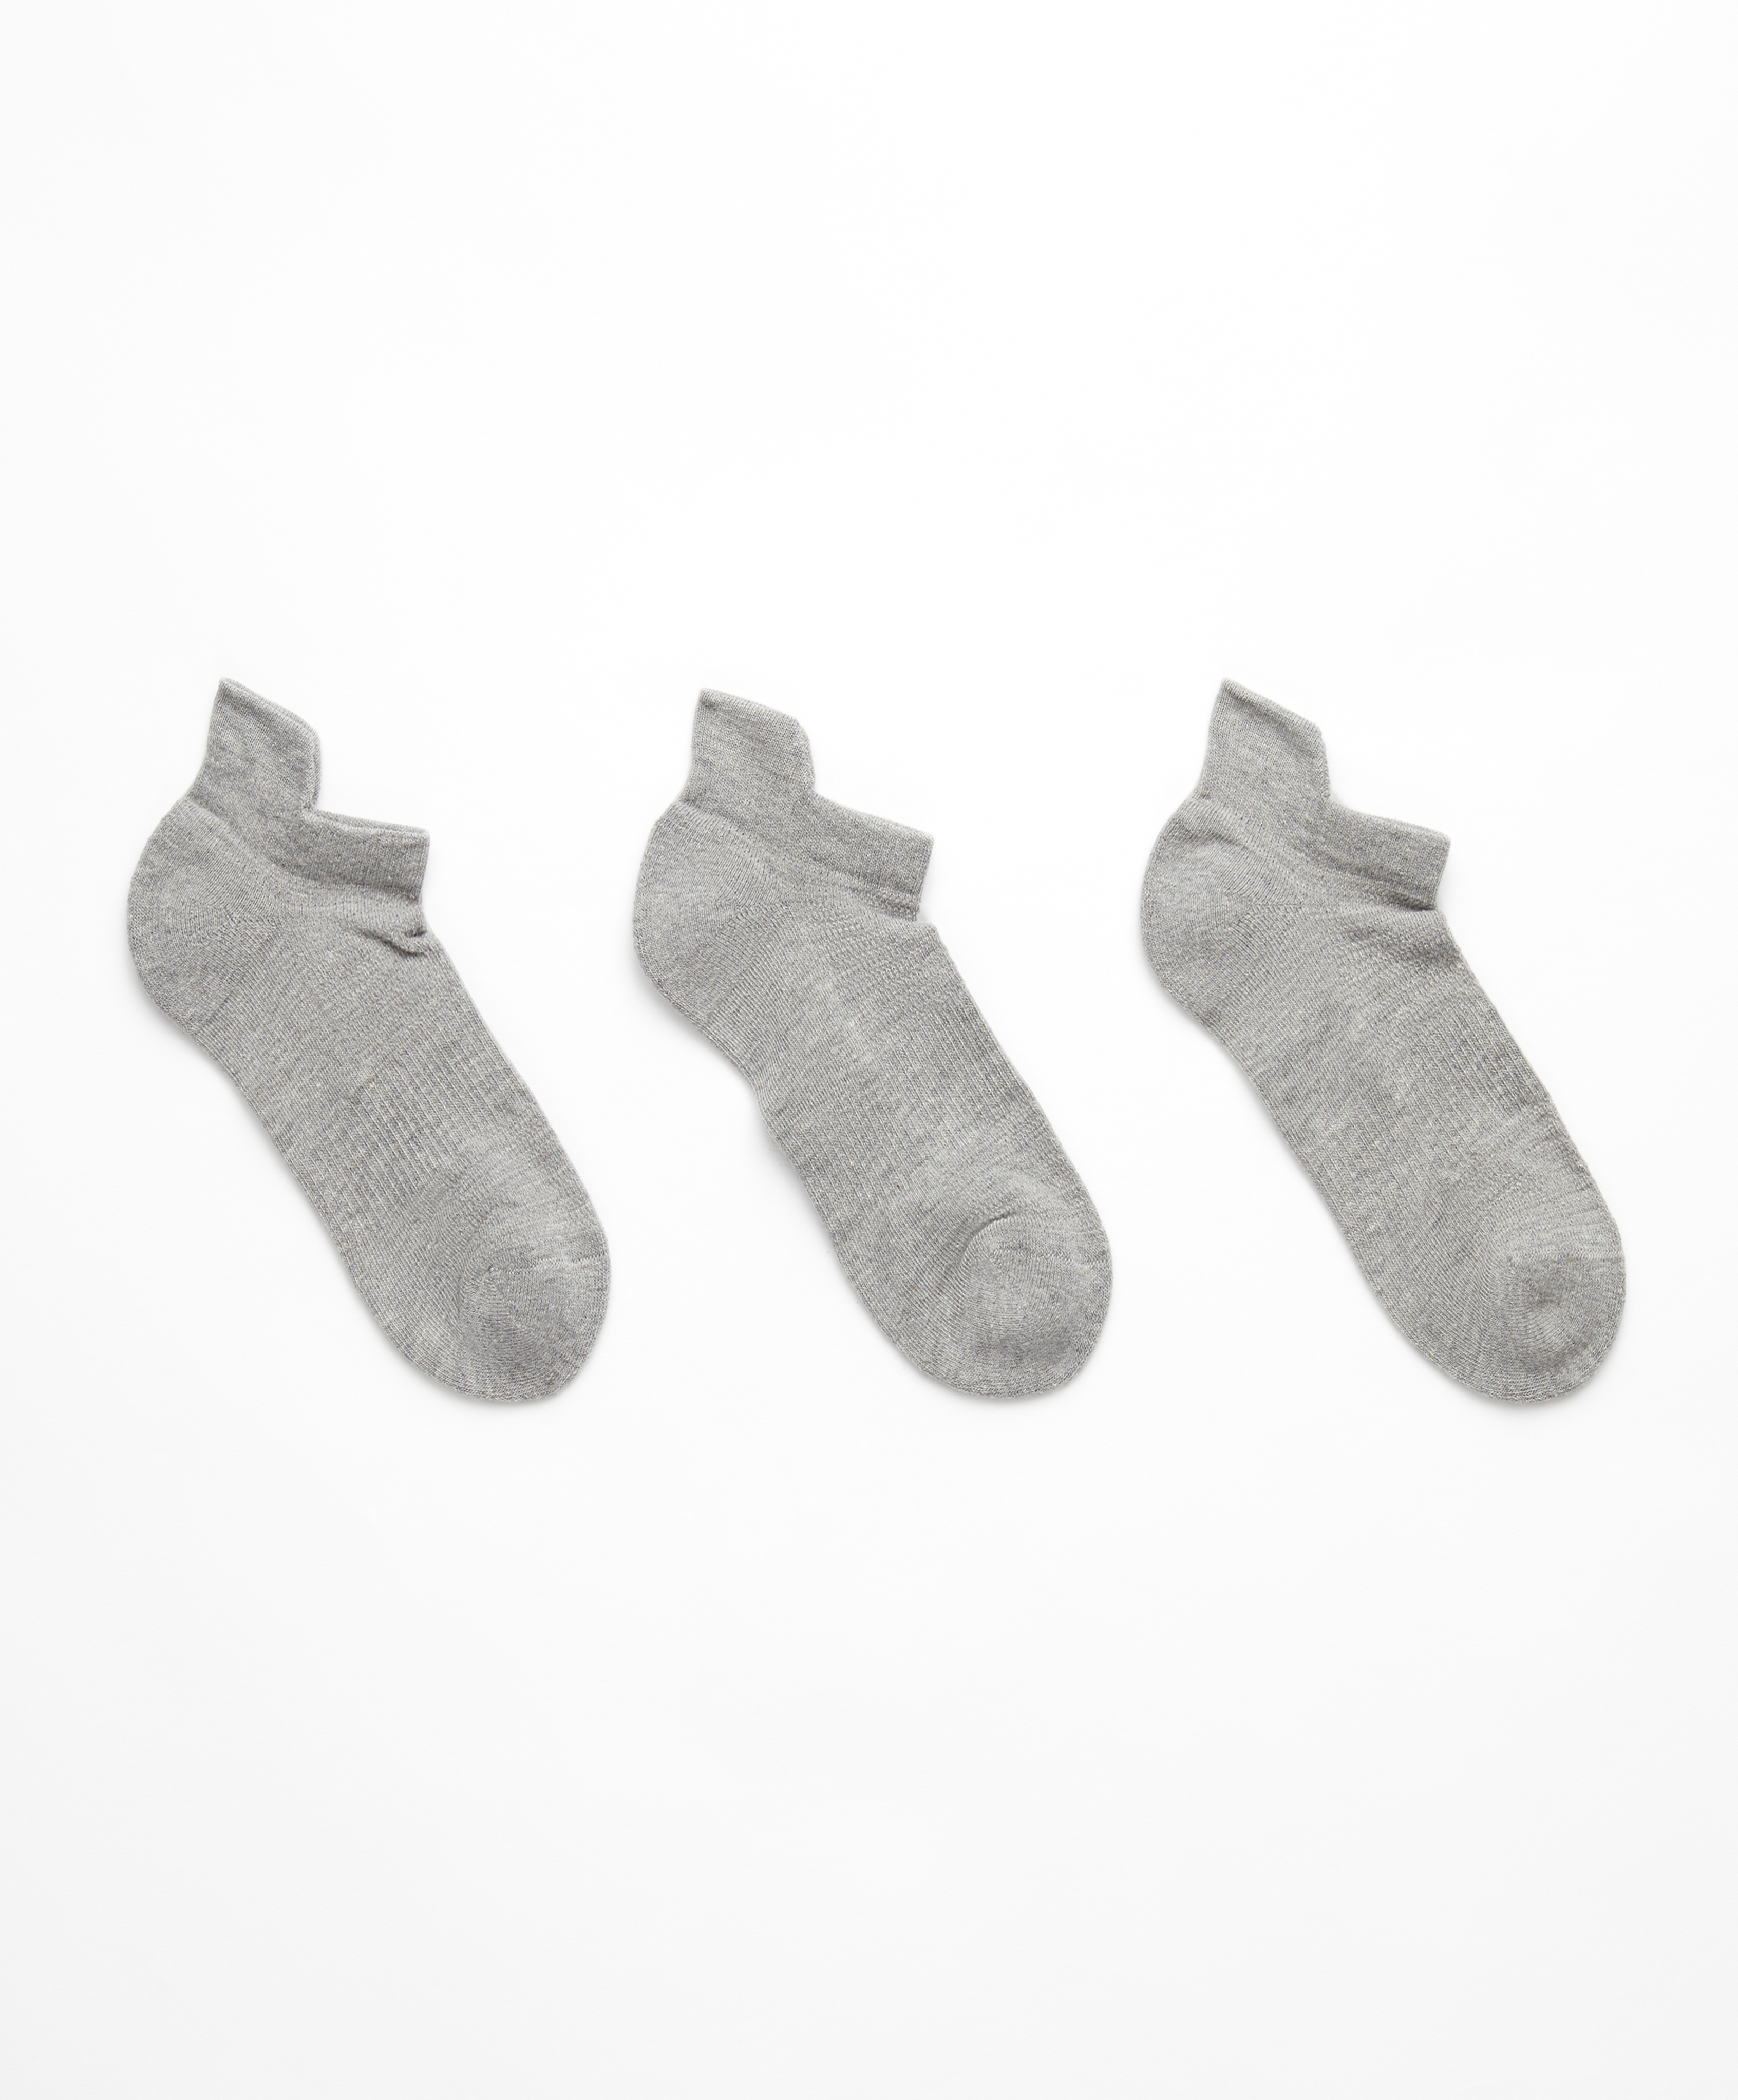 3 pairs of cotton quarter sports socks